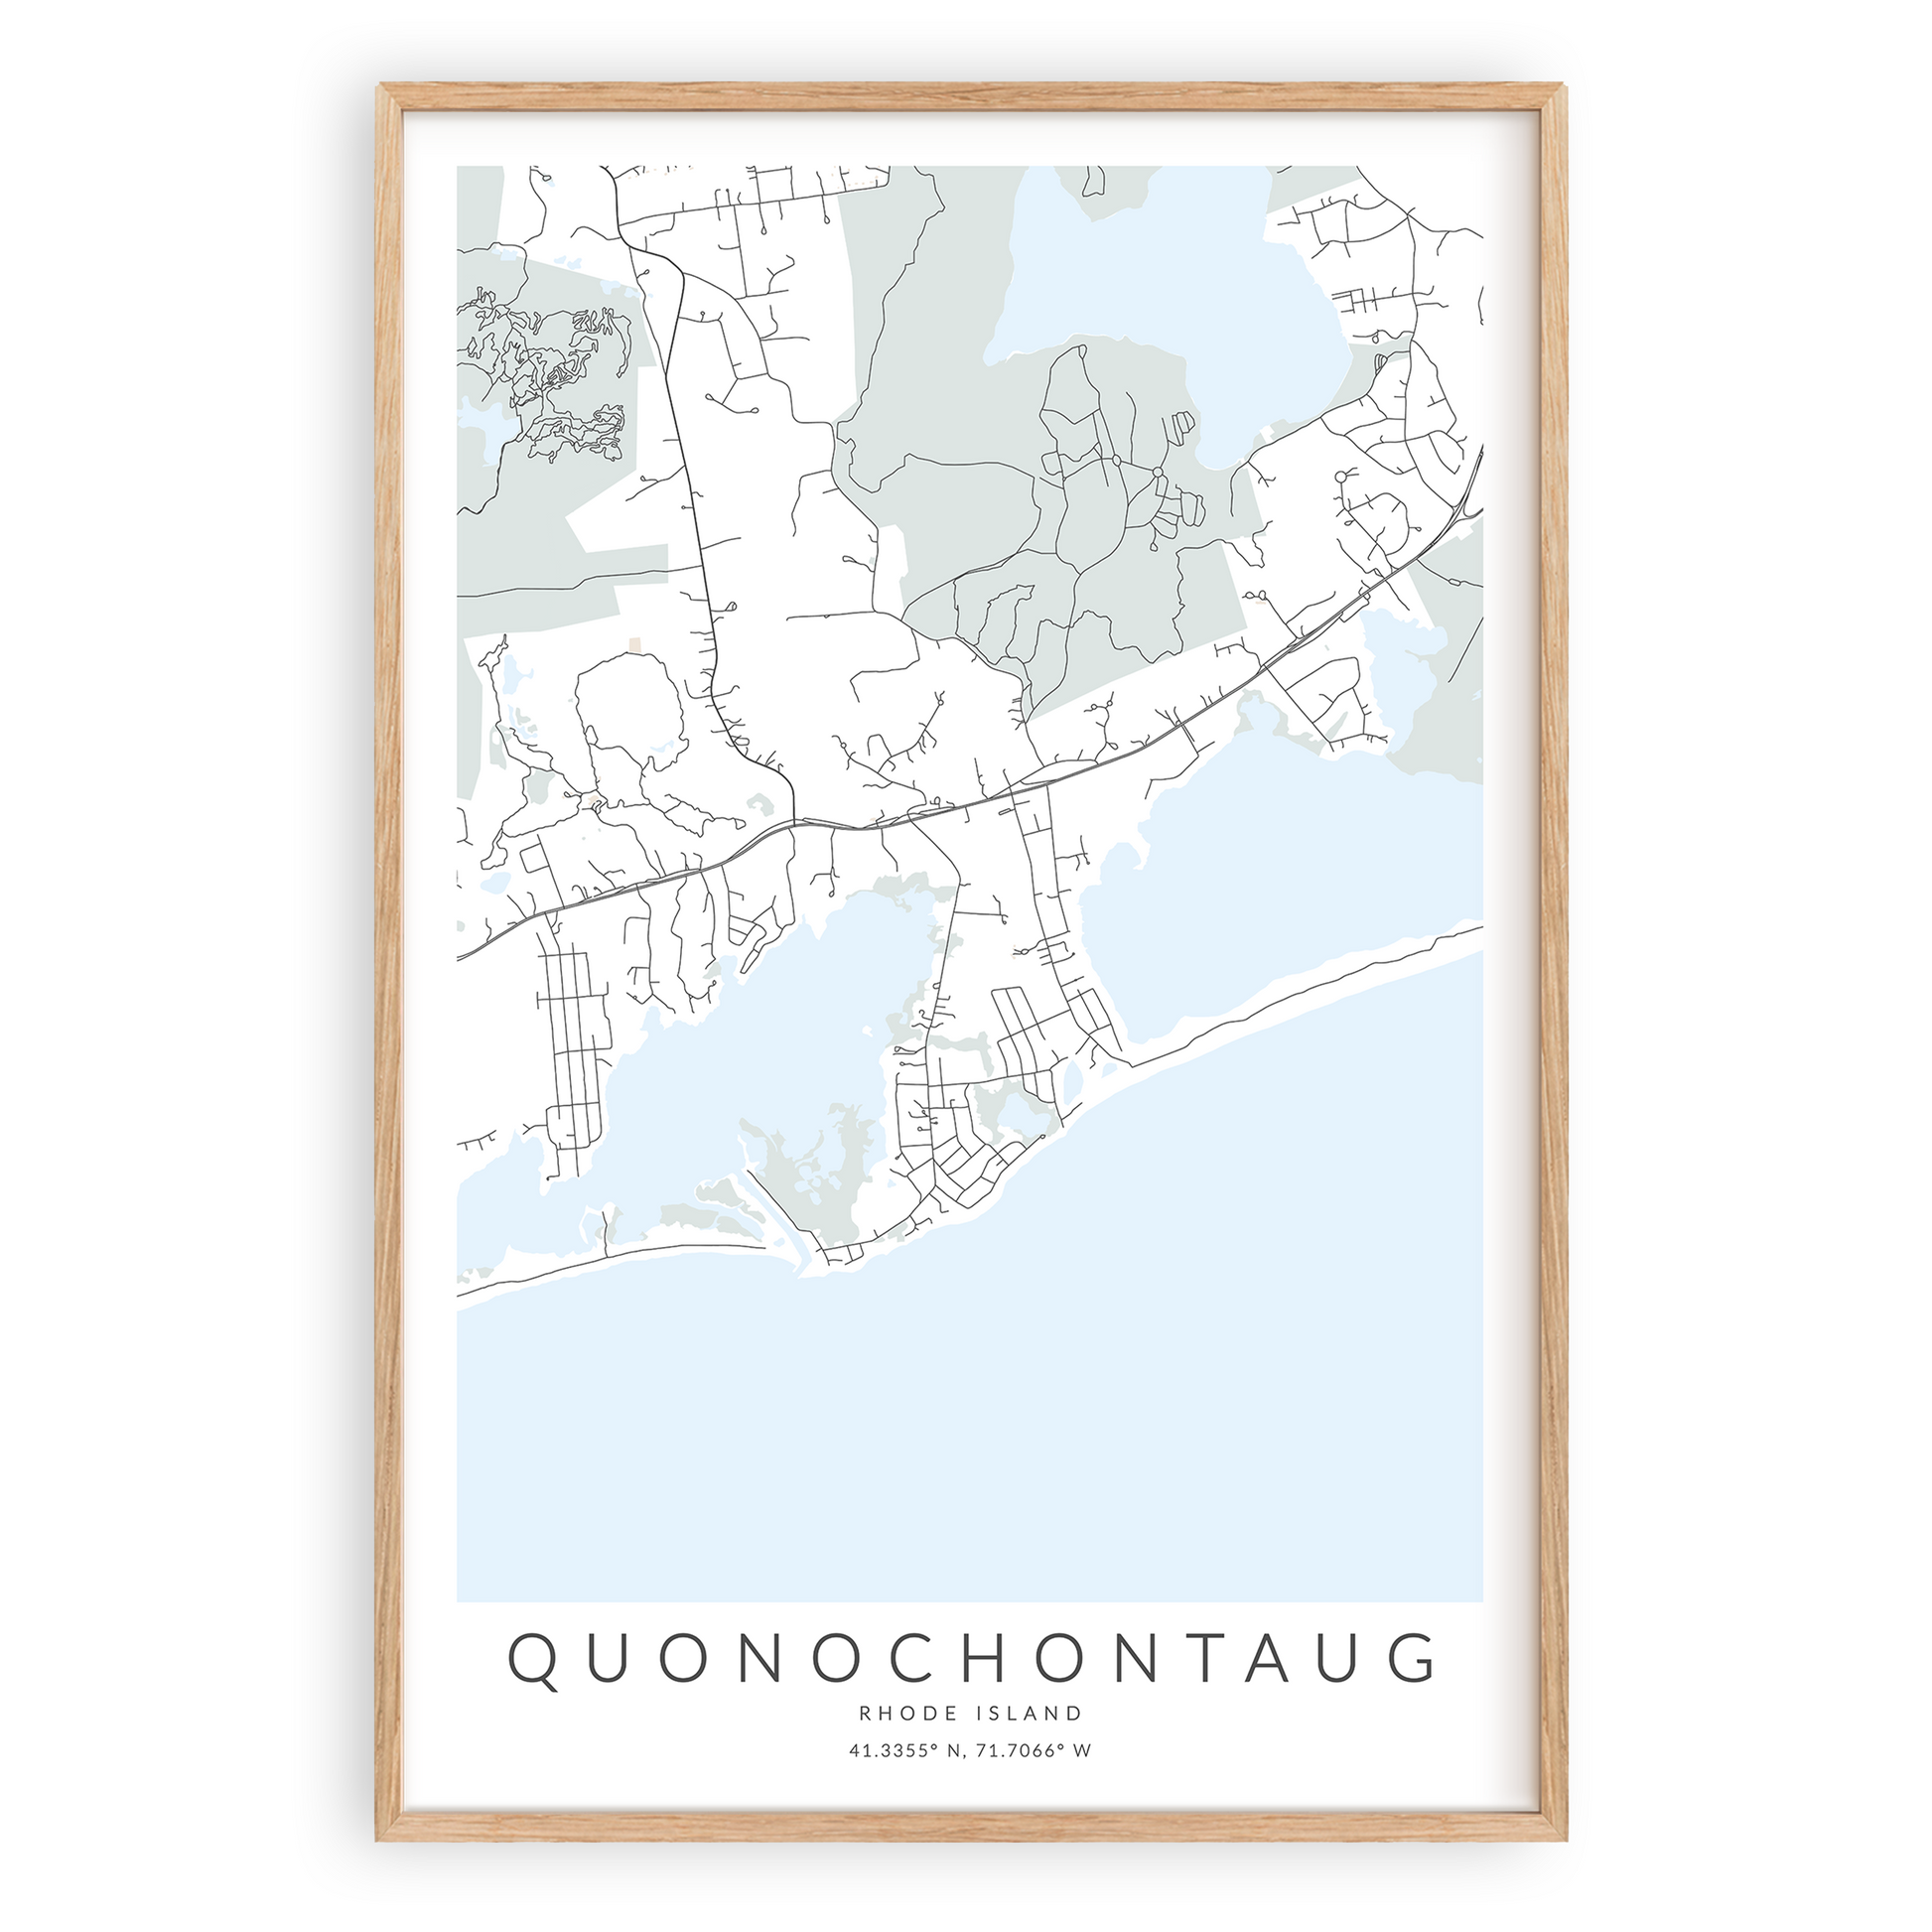 Quonochontaug Rhode Island map print in wood frame